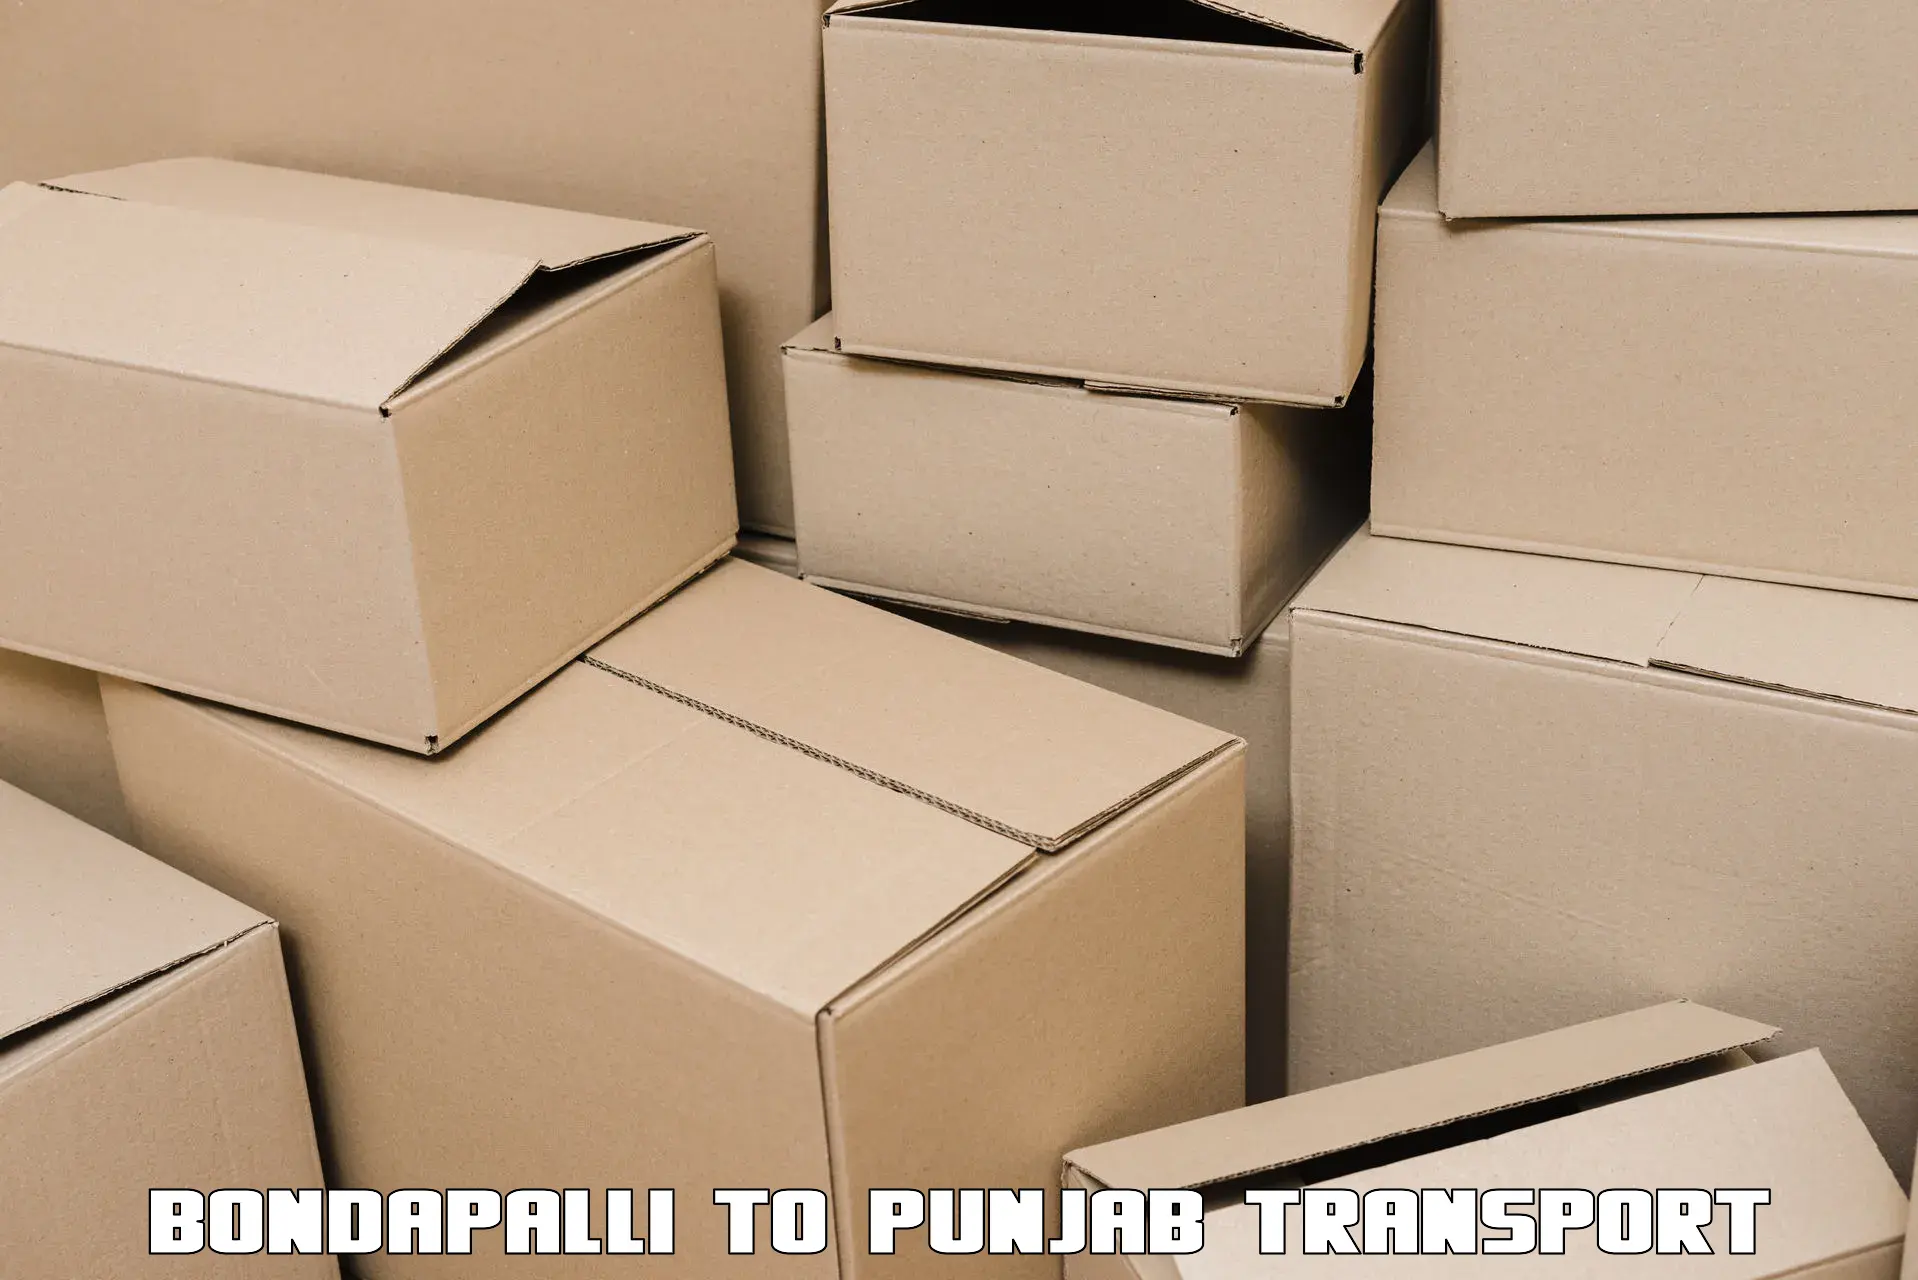 Daily parcel service transport Bondapalli to Tarsikka